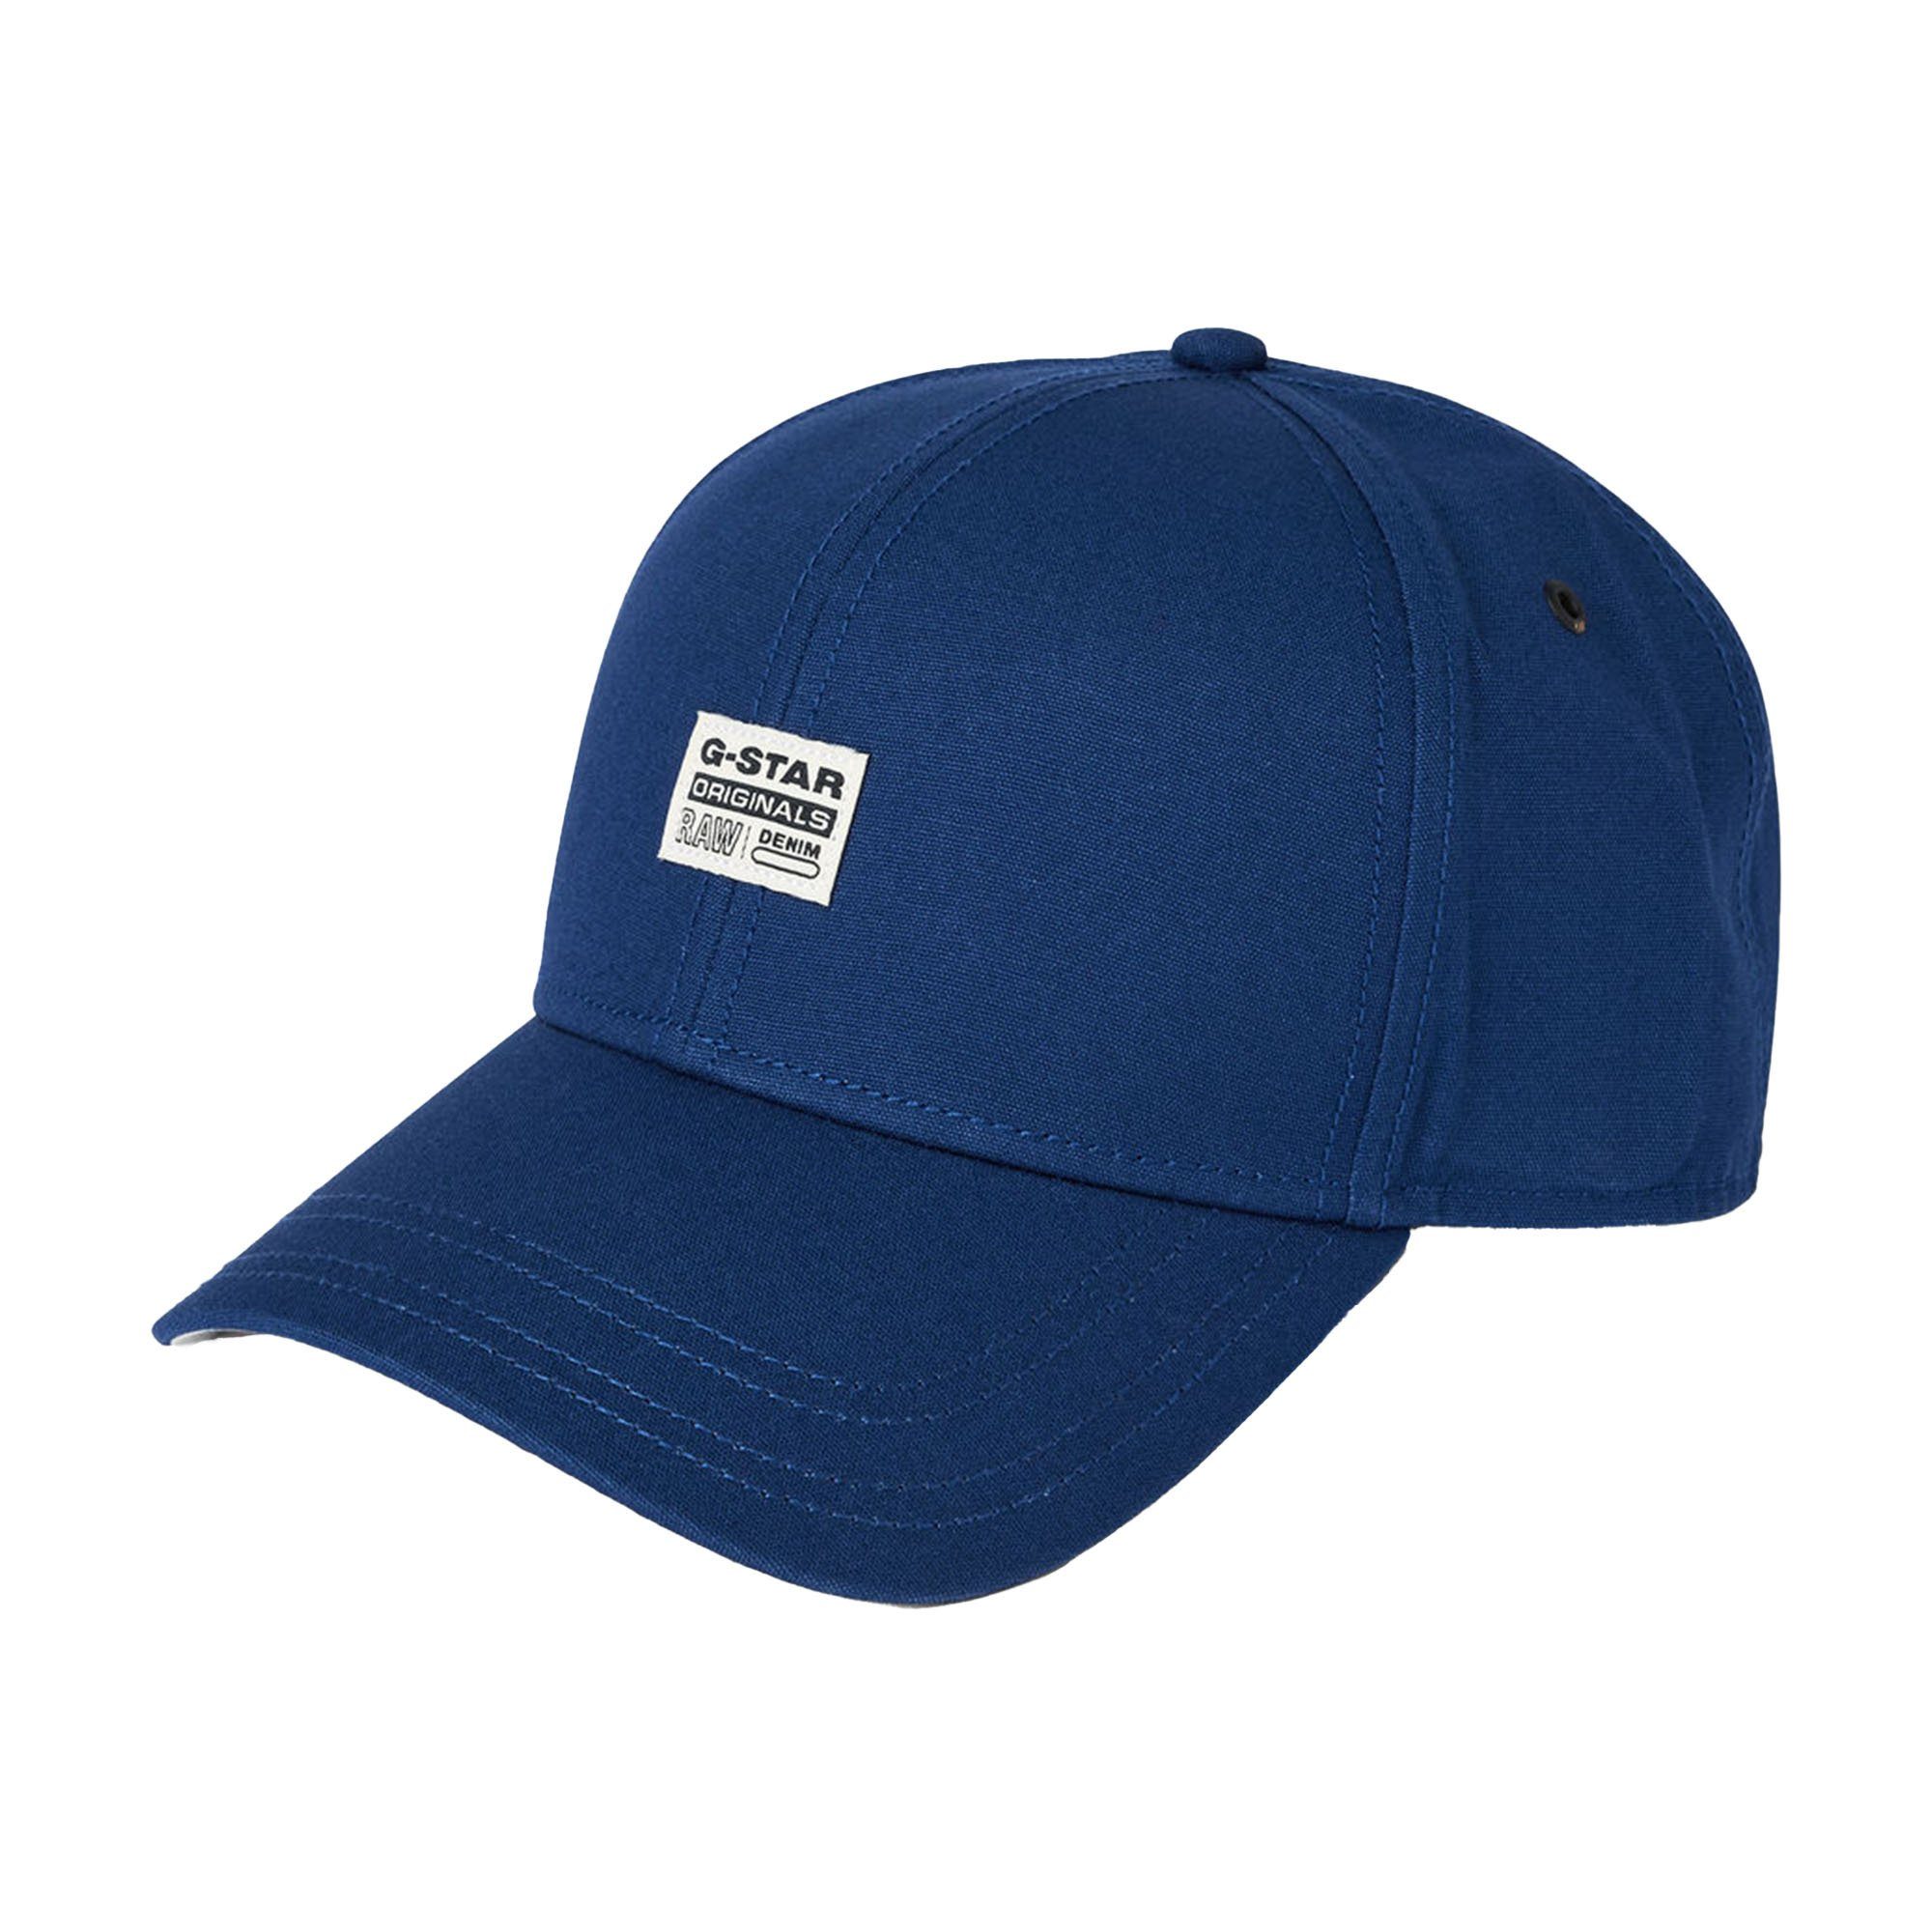 G-Star RAW Baseball - Logo Cap Originals Cap Herren cap, Blau Käppi, baseball